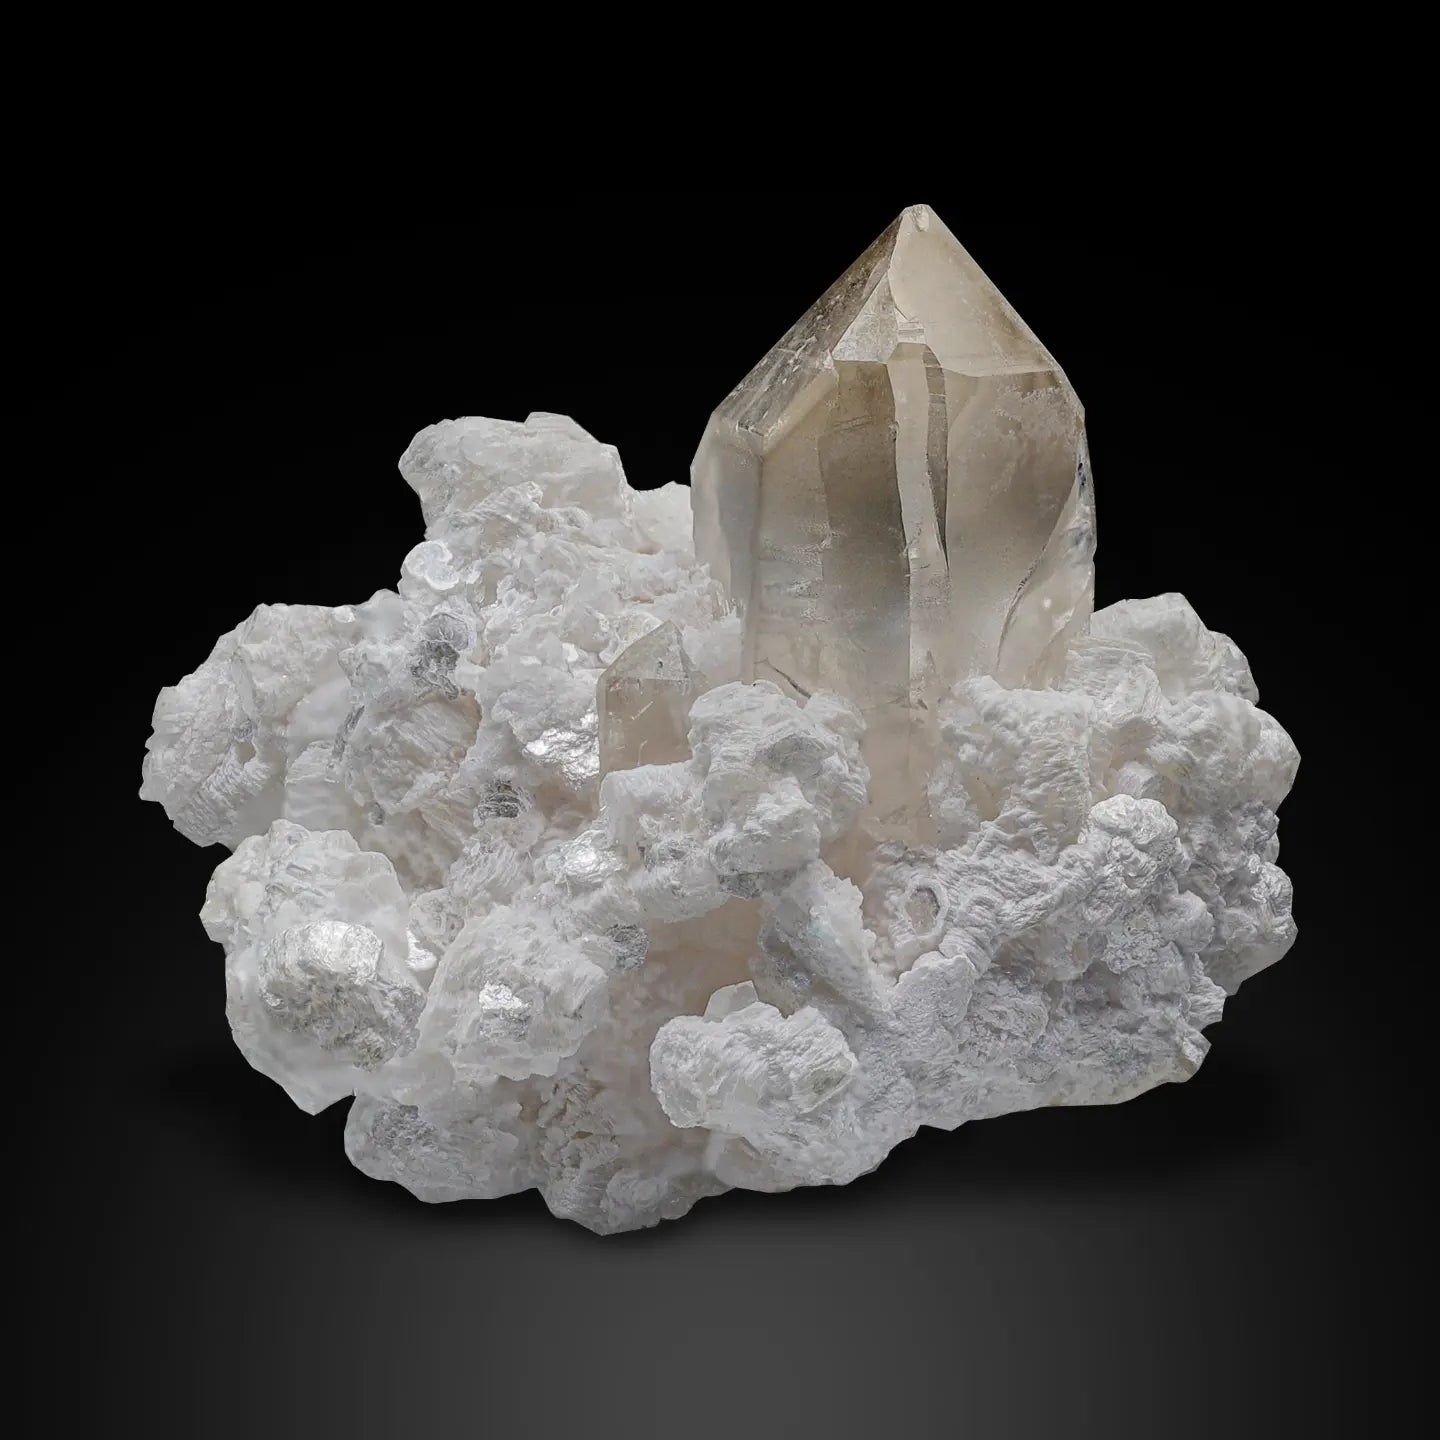 Sensational Smoky Quartz crystal on Muscovite Cleavelandite Matrix from Pakistan for Sale